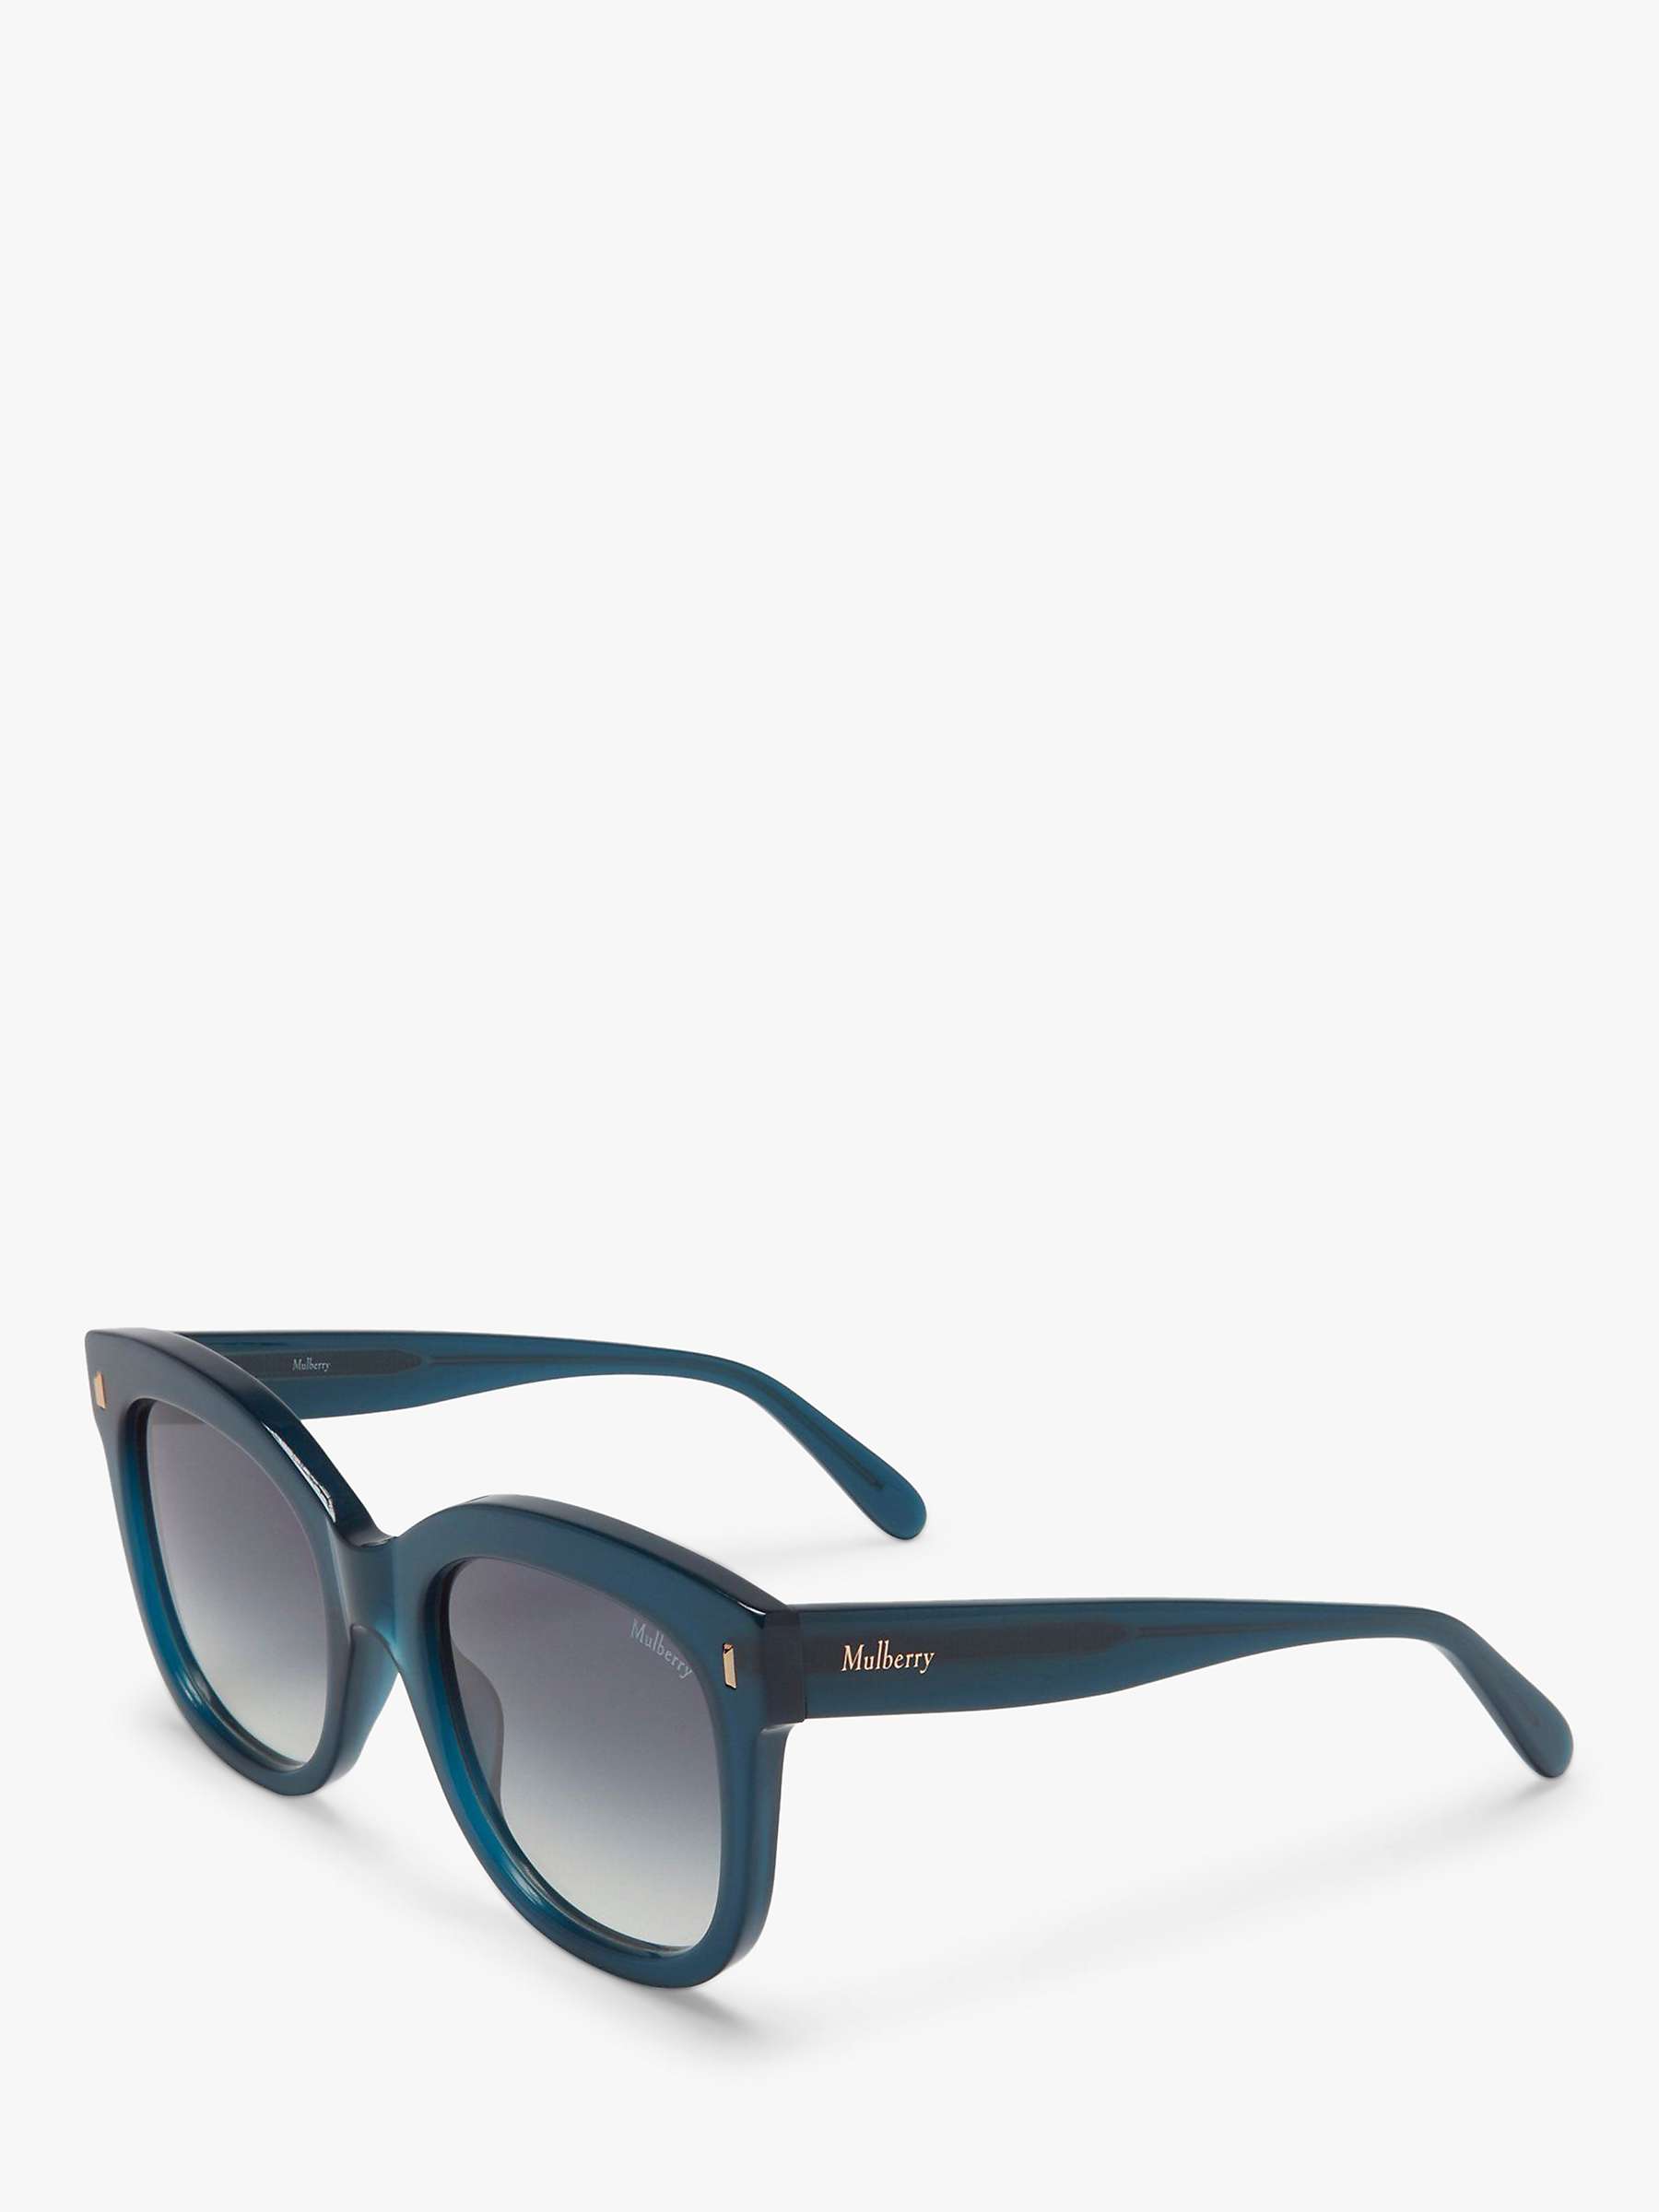 Buy Mulberry Women's Charlotte D-Frame Sunglasses Online at johnlewis.com